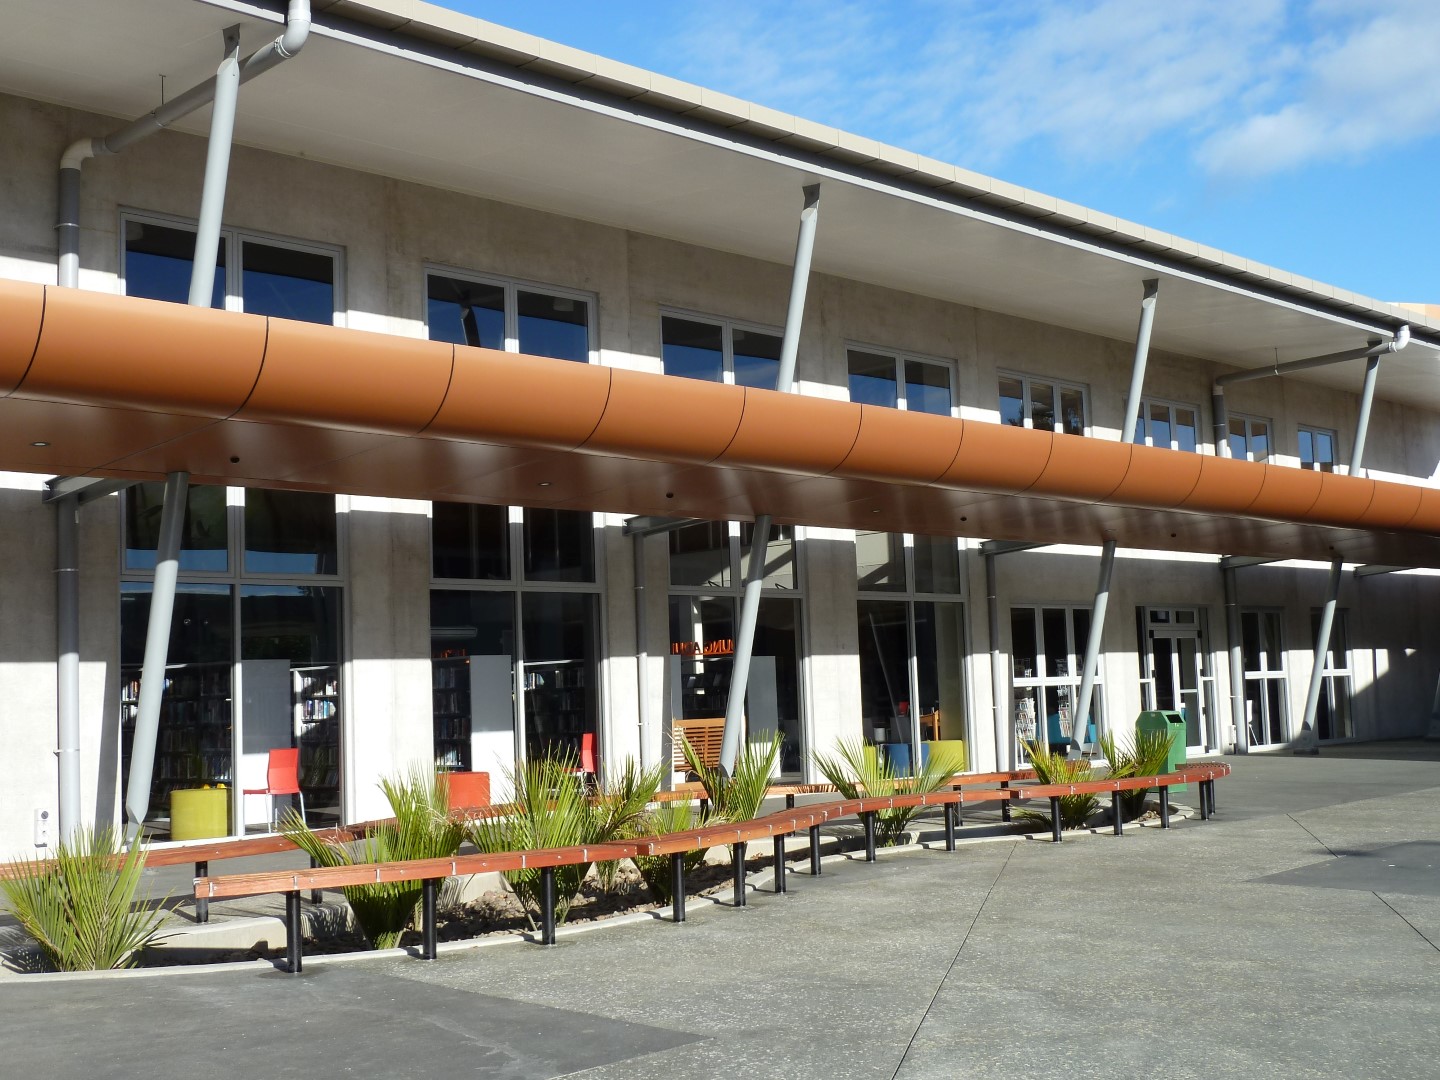 te-ahu-centre-kaitaia-arcline-architecture-commercial-community-cultural (4)